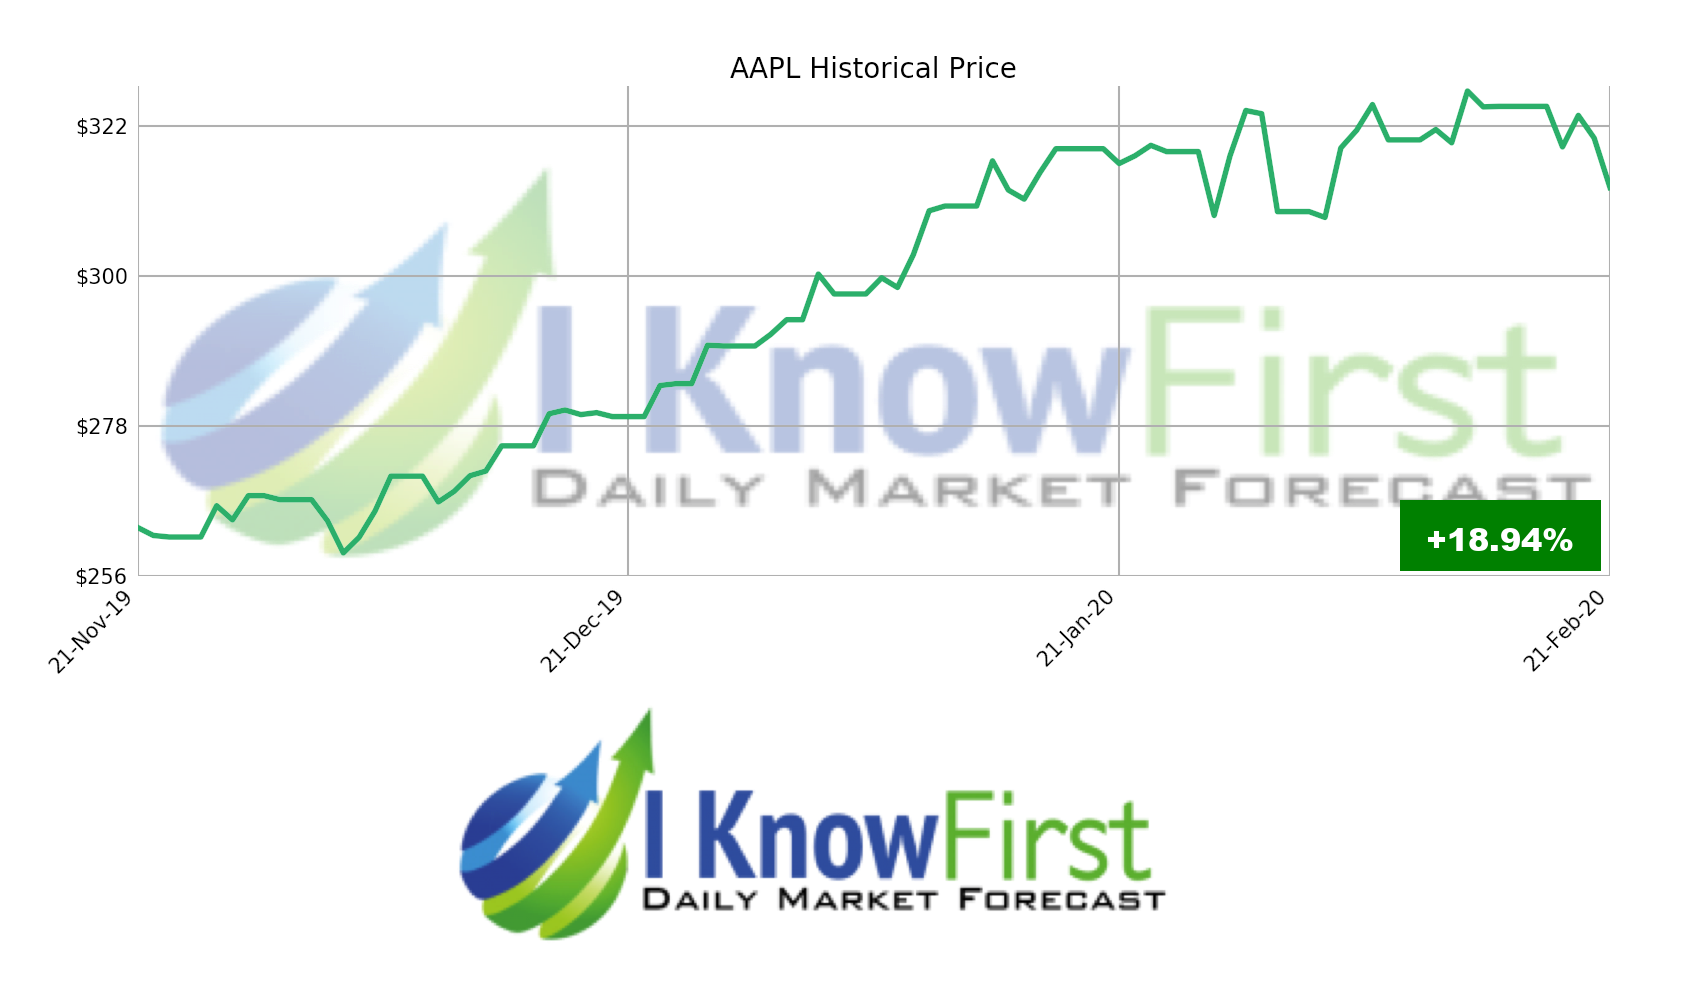 AAPL Stock Forecast